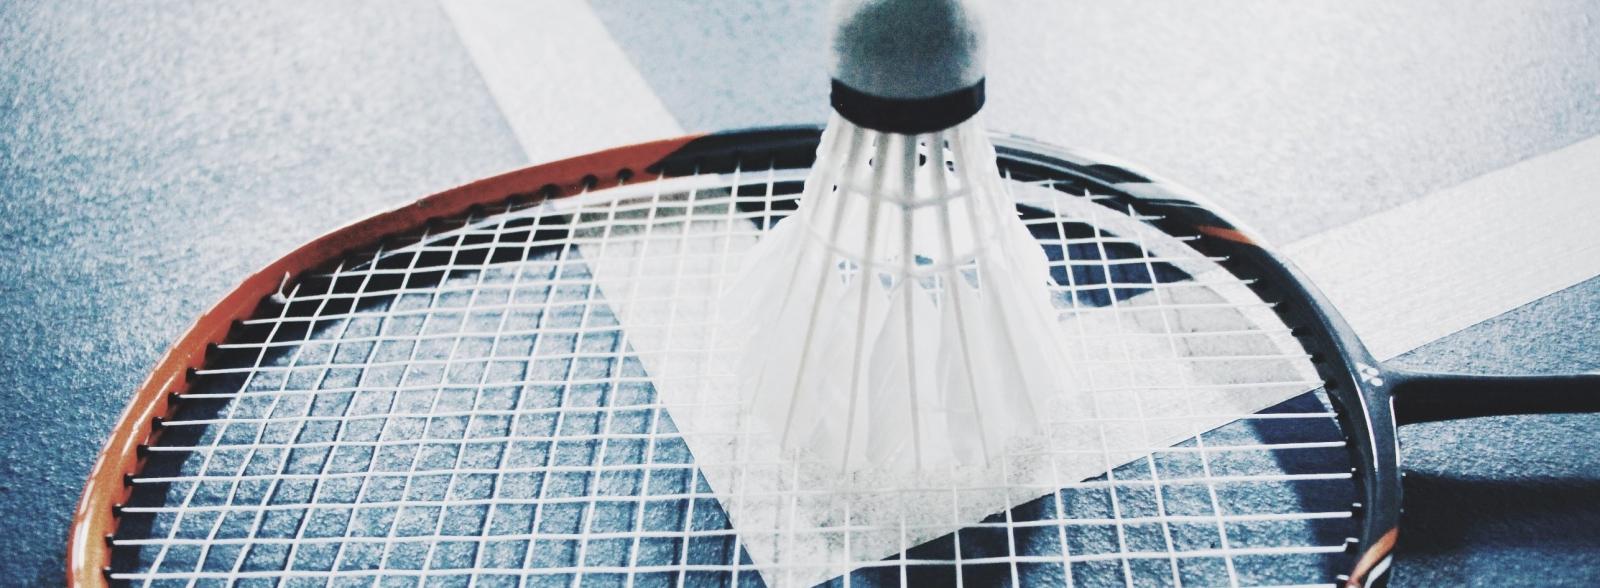 Badminton Bild